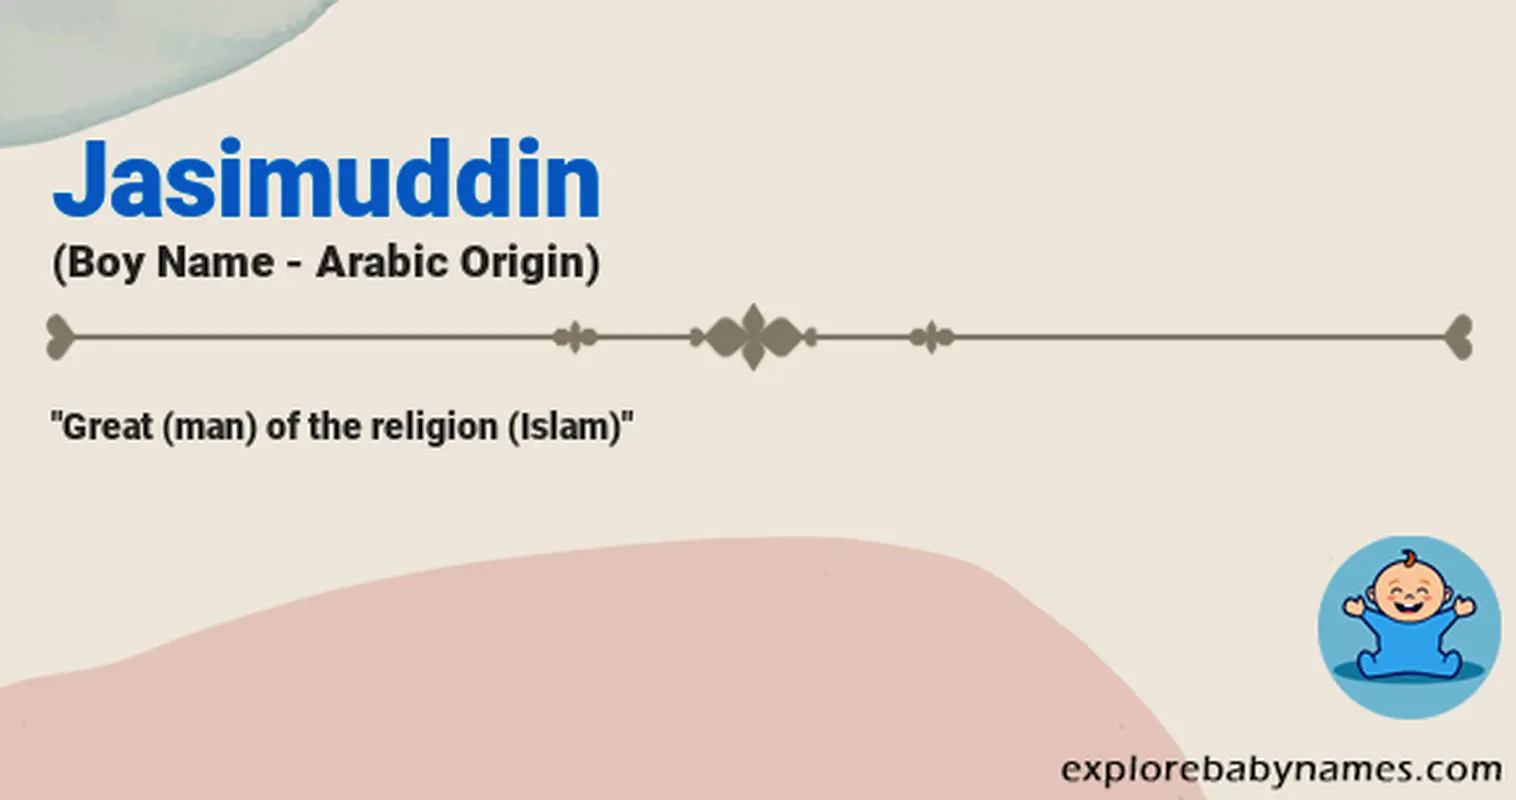 Meaning of Jasimuddin